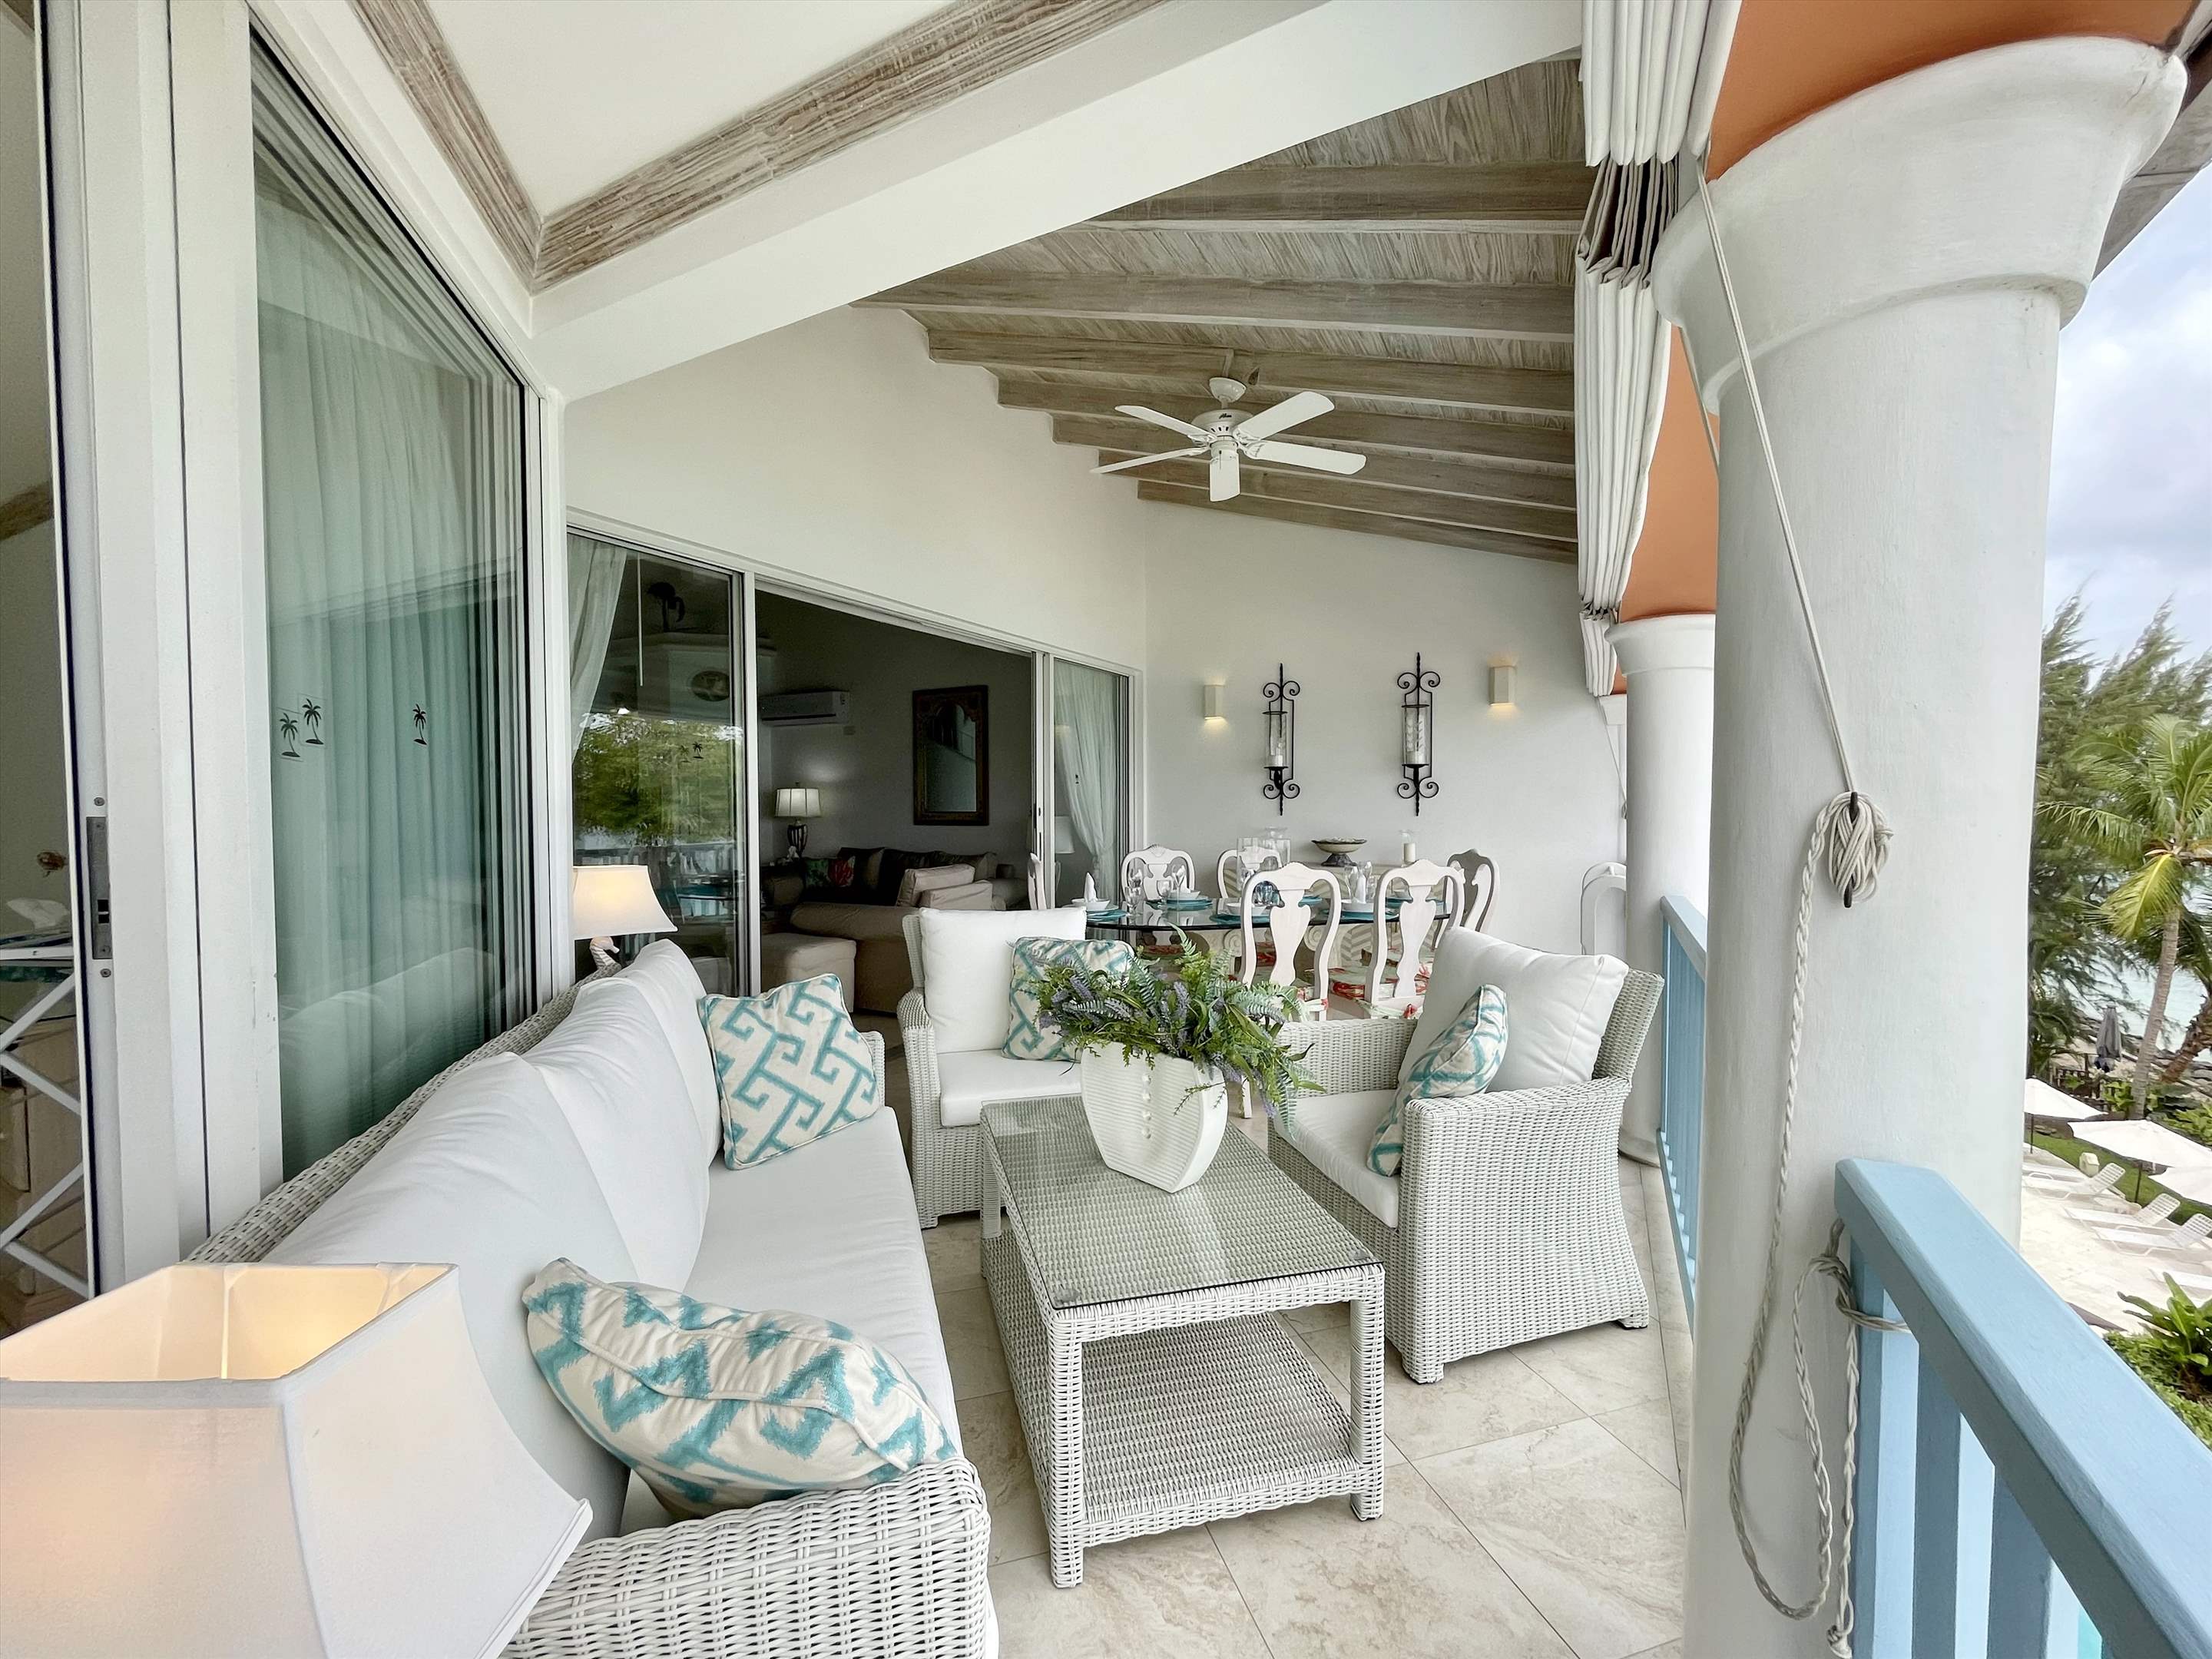 Villas on the Beach 403, 3 bedroom, 3 bedroom apartment in St. James & West Coast, Barbados Photo #2